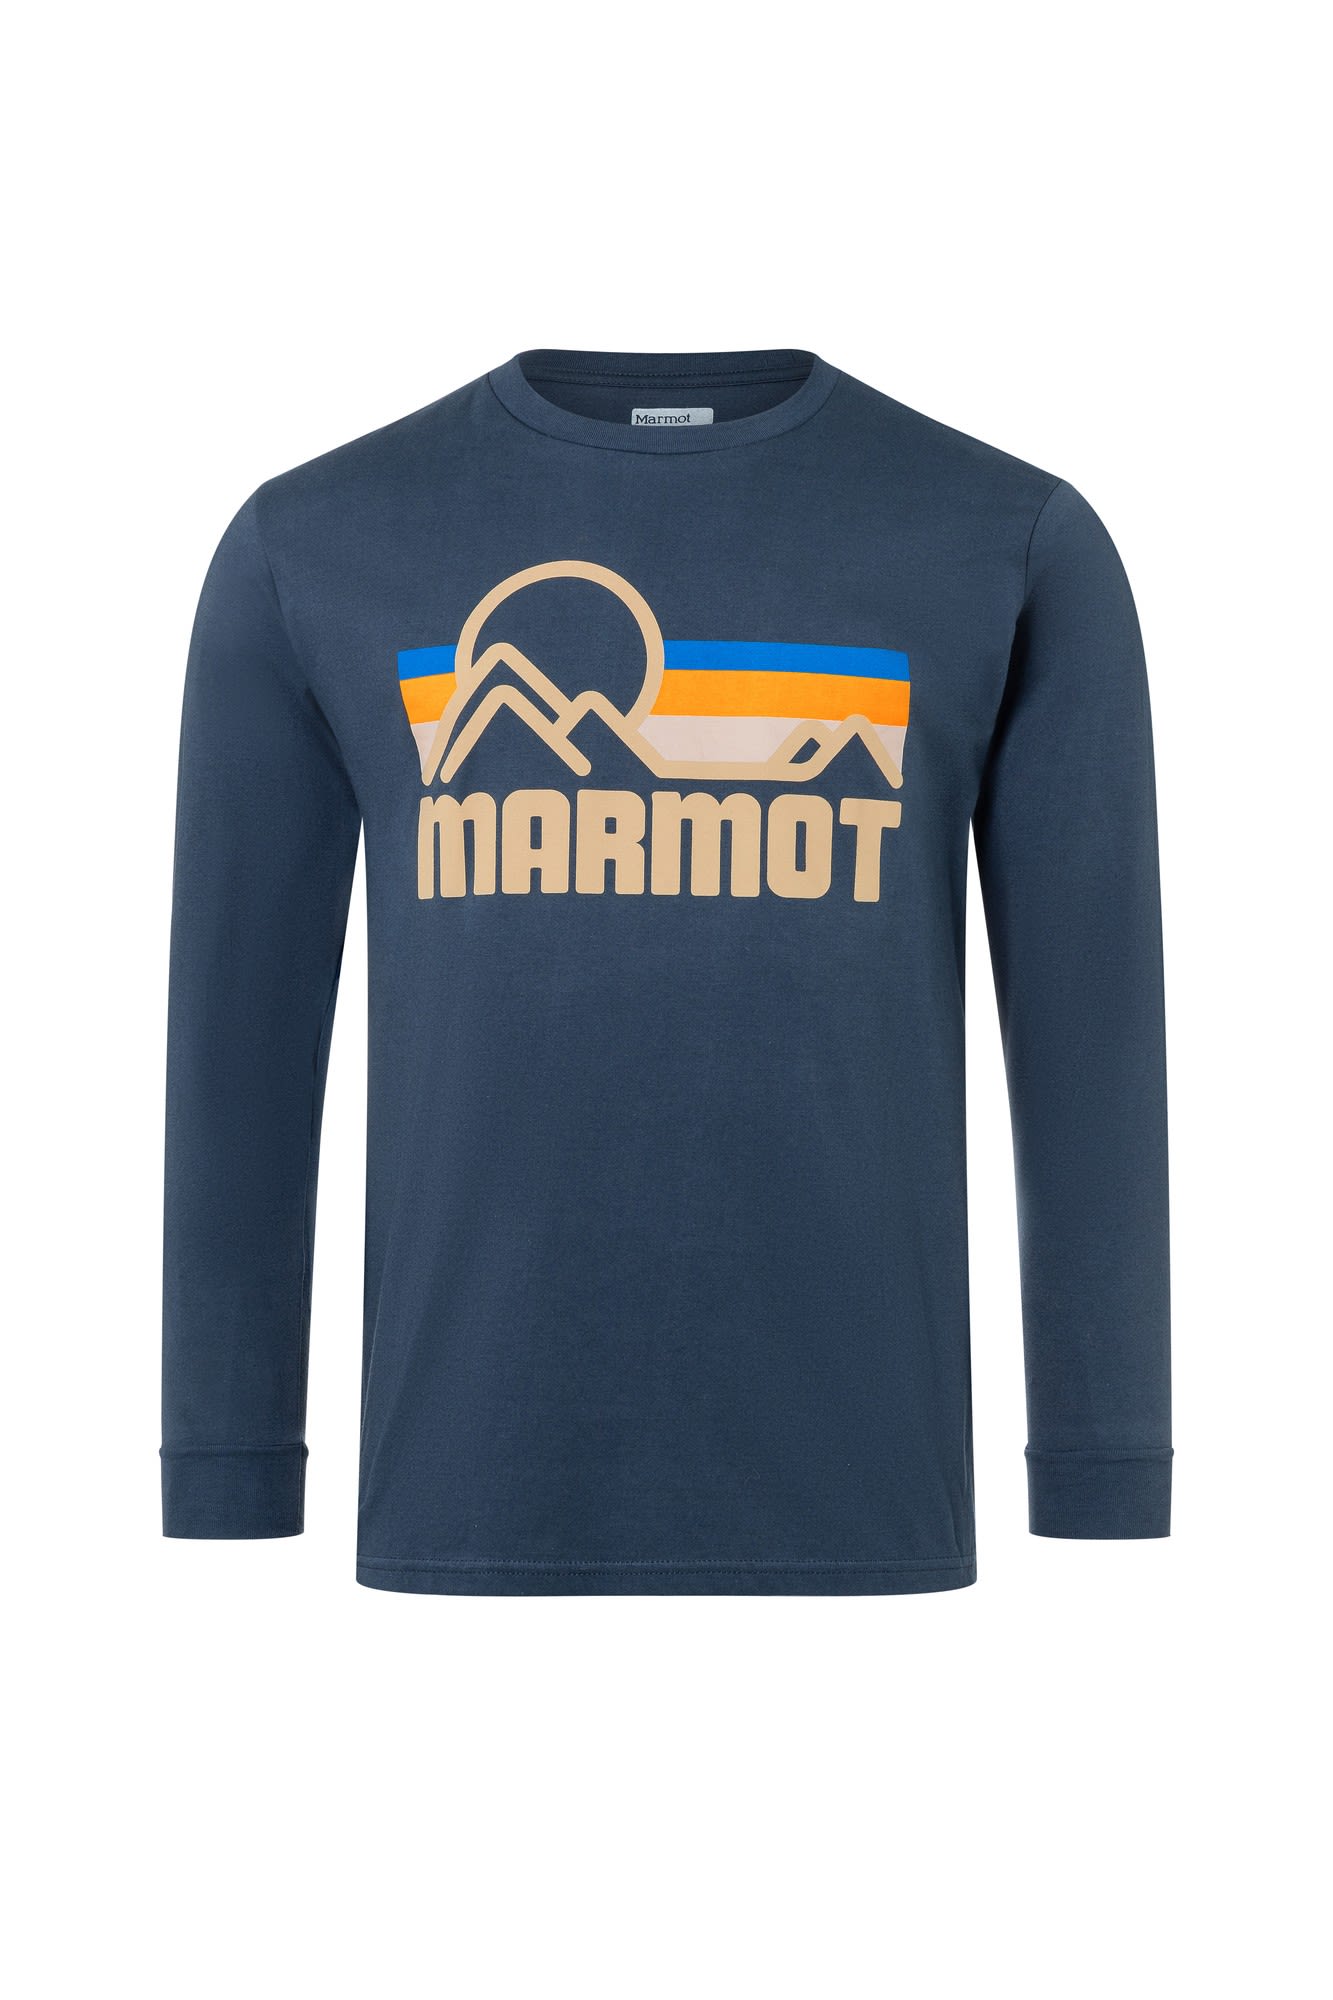 Marmot Coastal Tee Long-Sleeve Blau- Male Langarm-Shirts- Grsse S - Farbe Arctic Navy unter Marmot